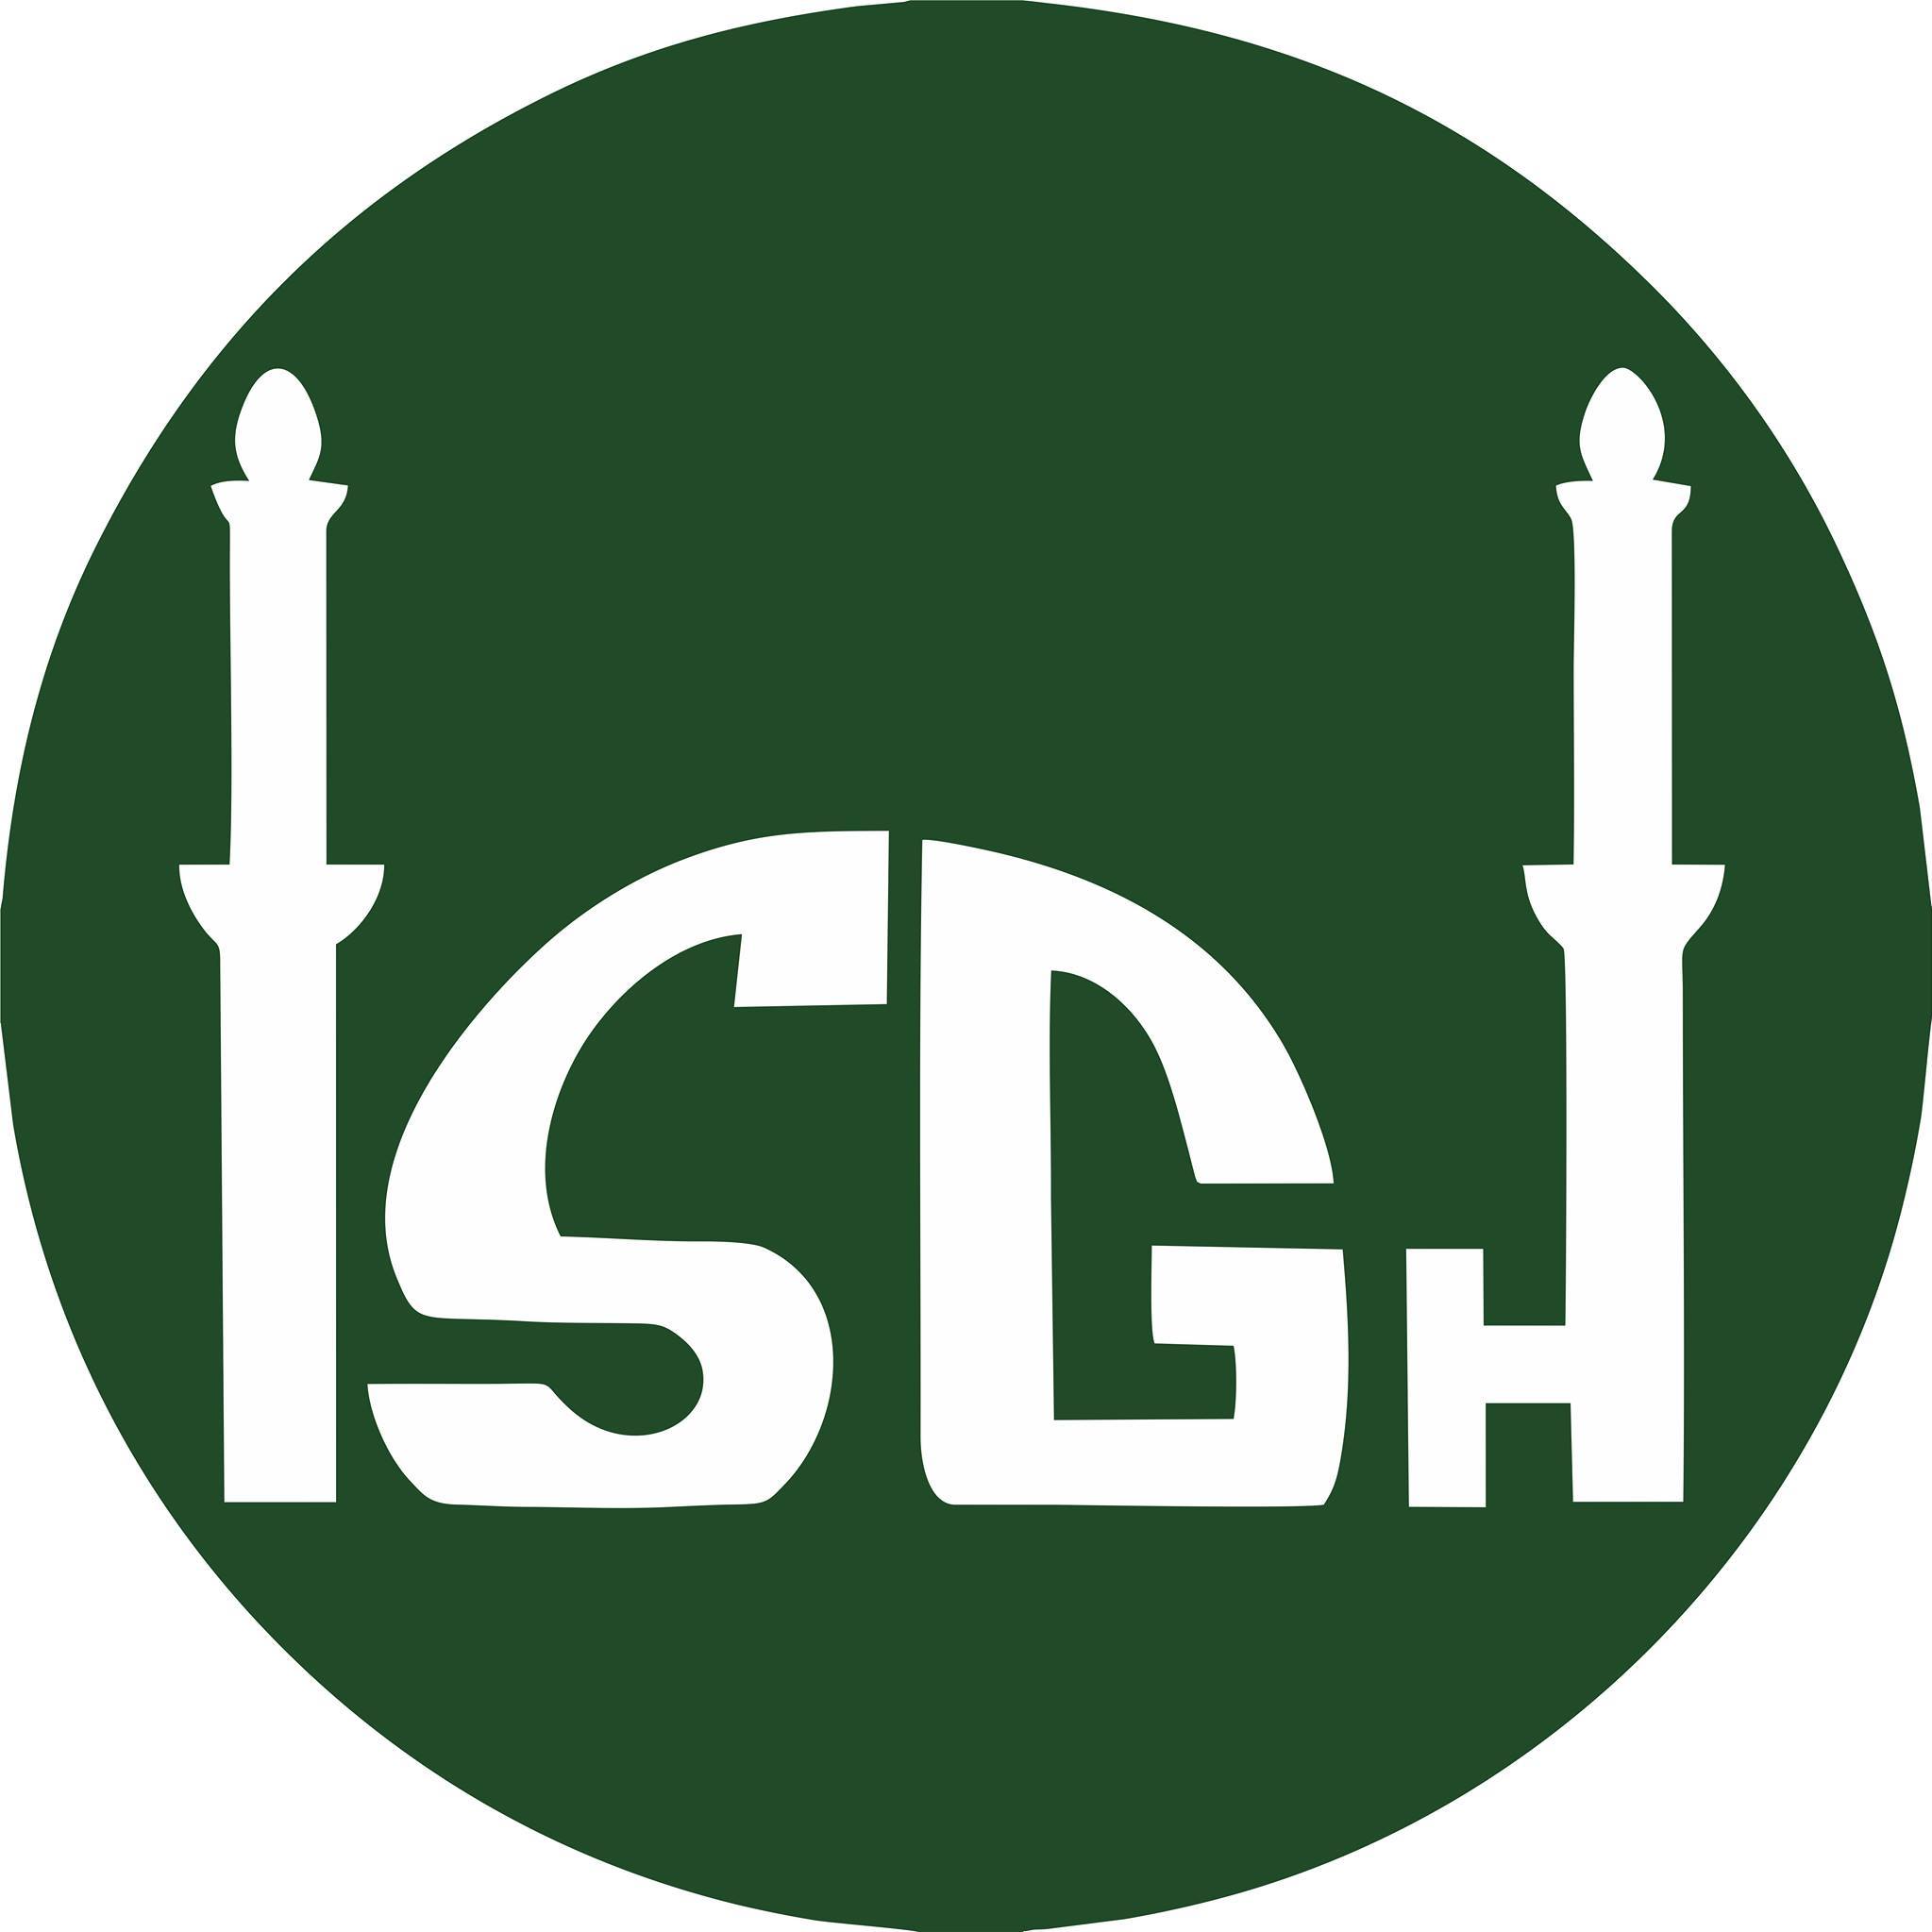 Islamic Society of Greater Houston - Muslim organization in Houston TX